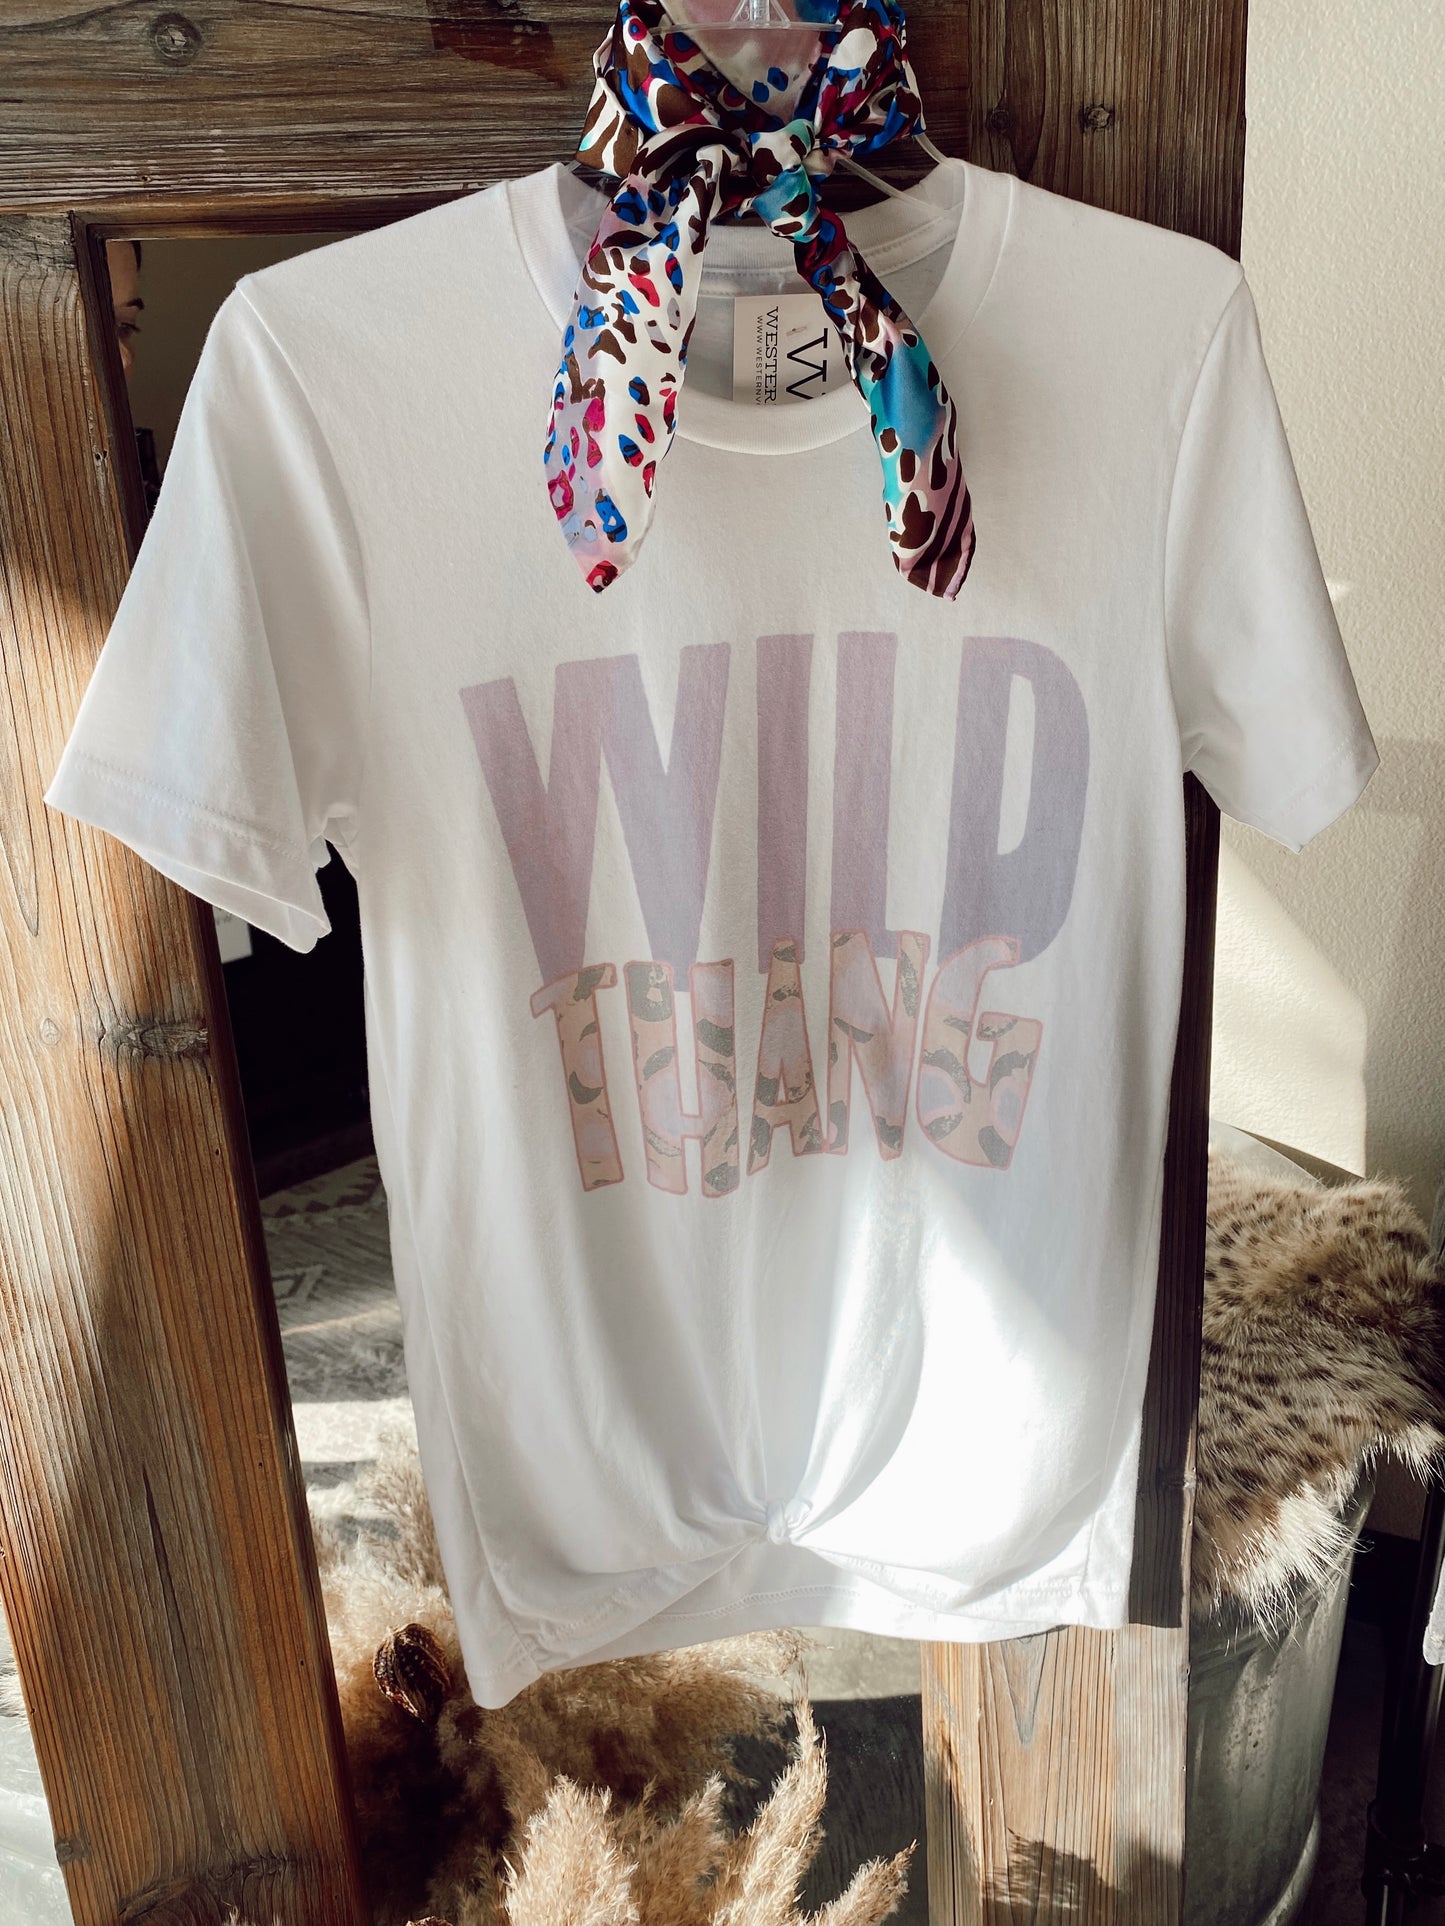 The Wild Thang T-Shirt